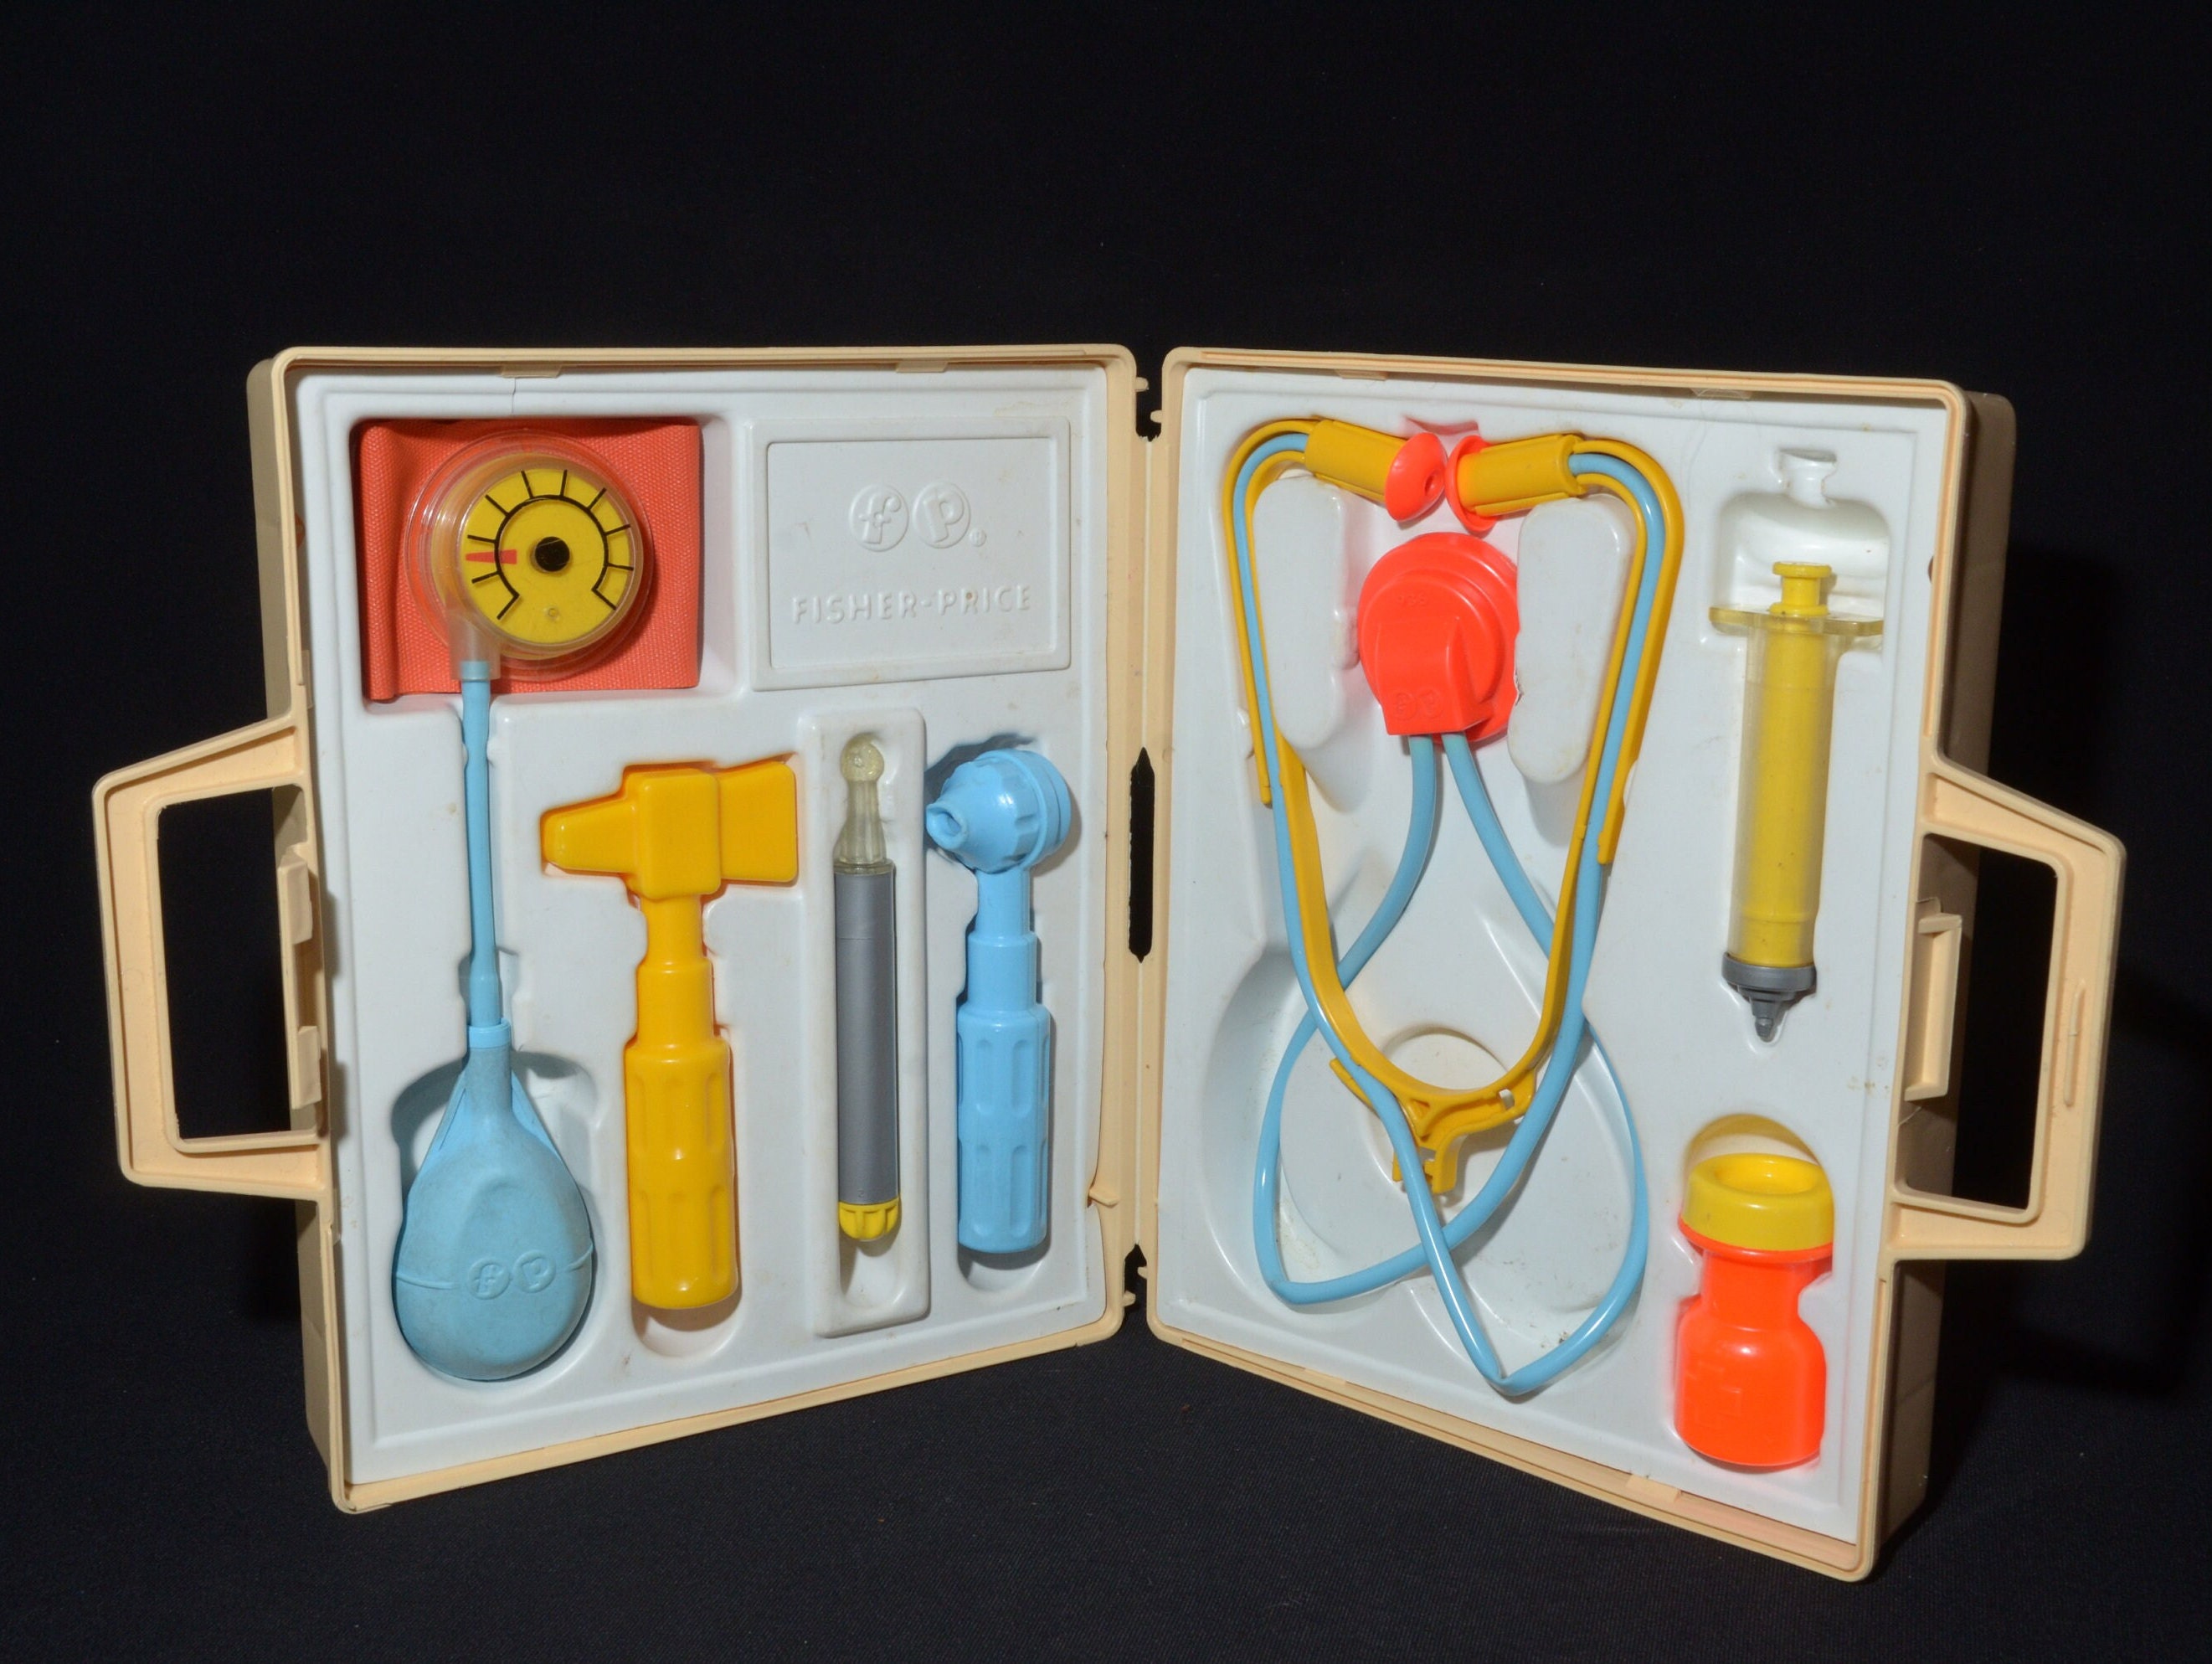 Vintage Fisher Price Doctors bag toy